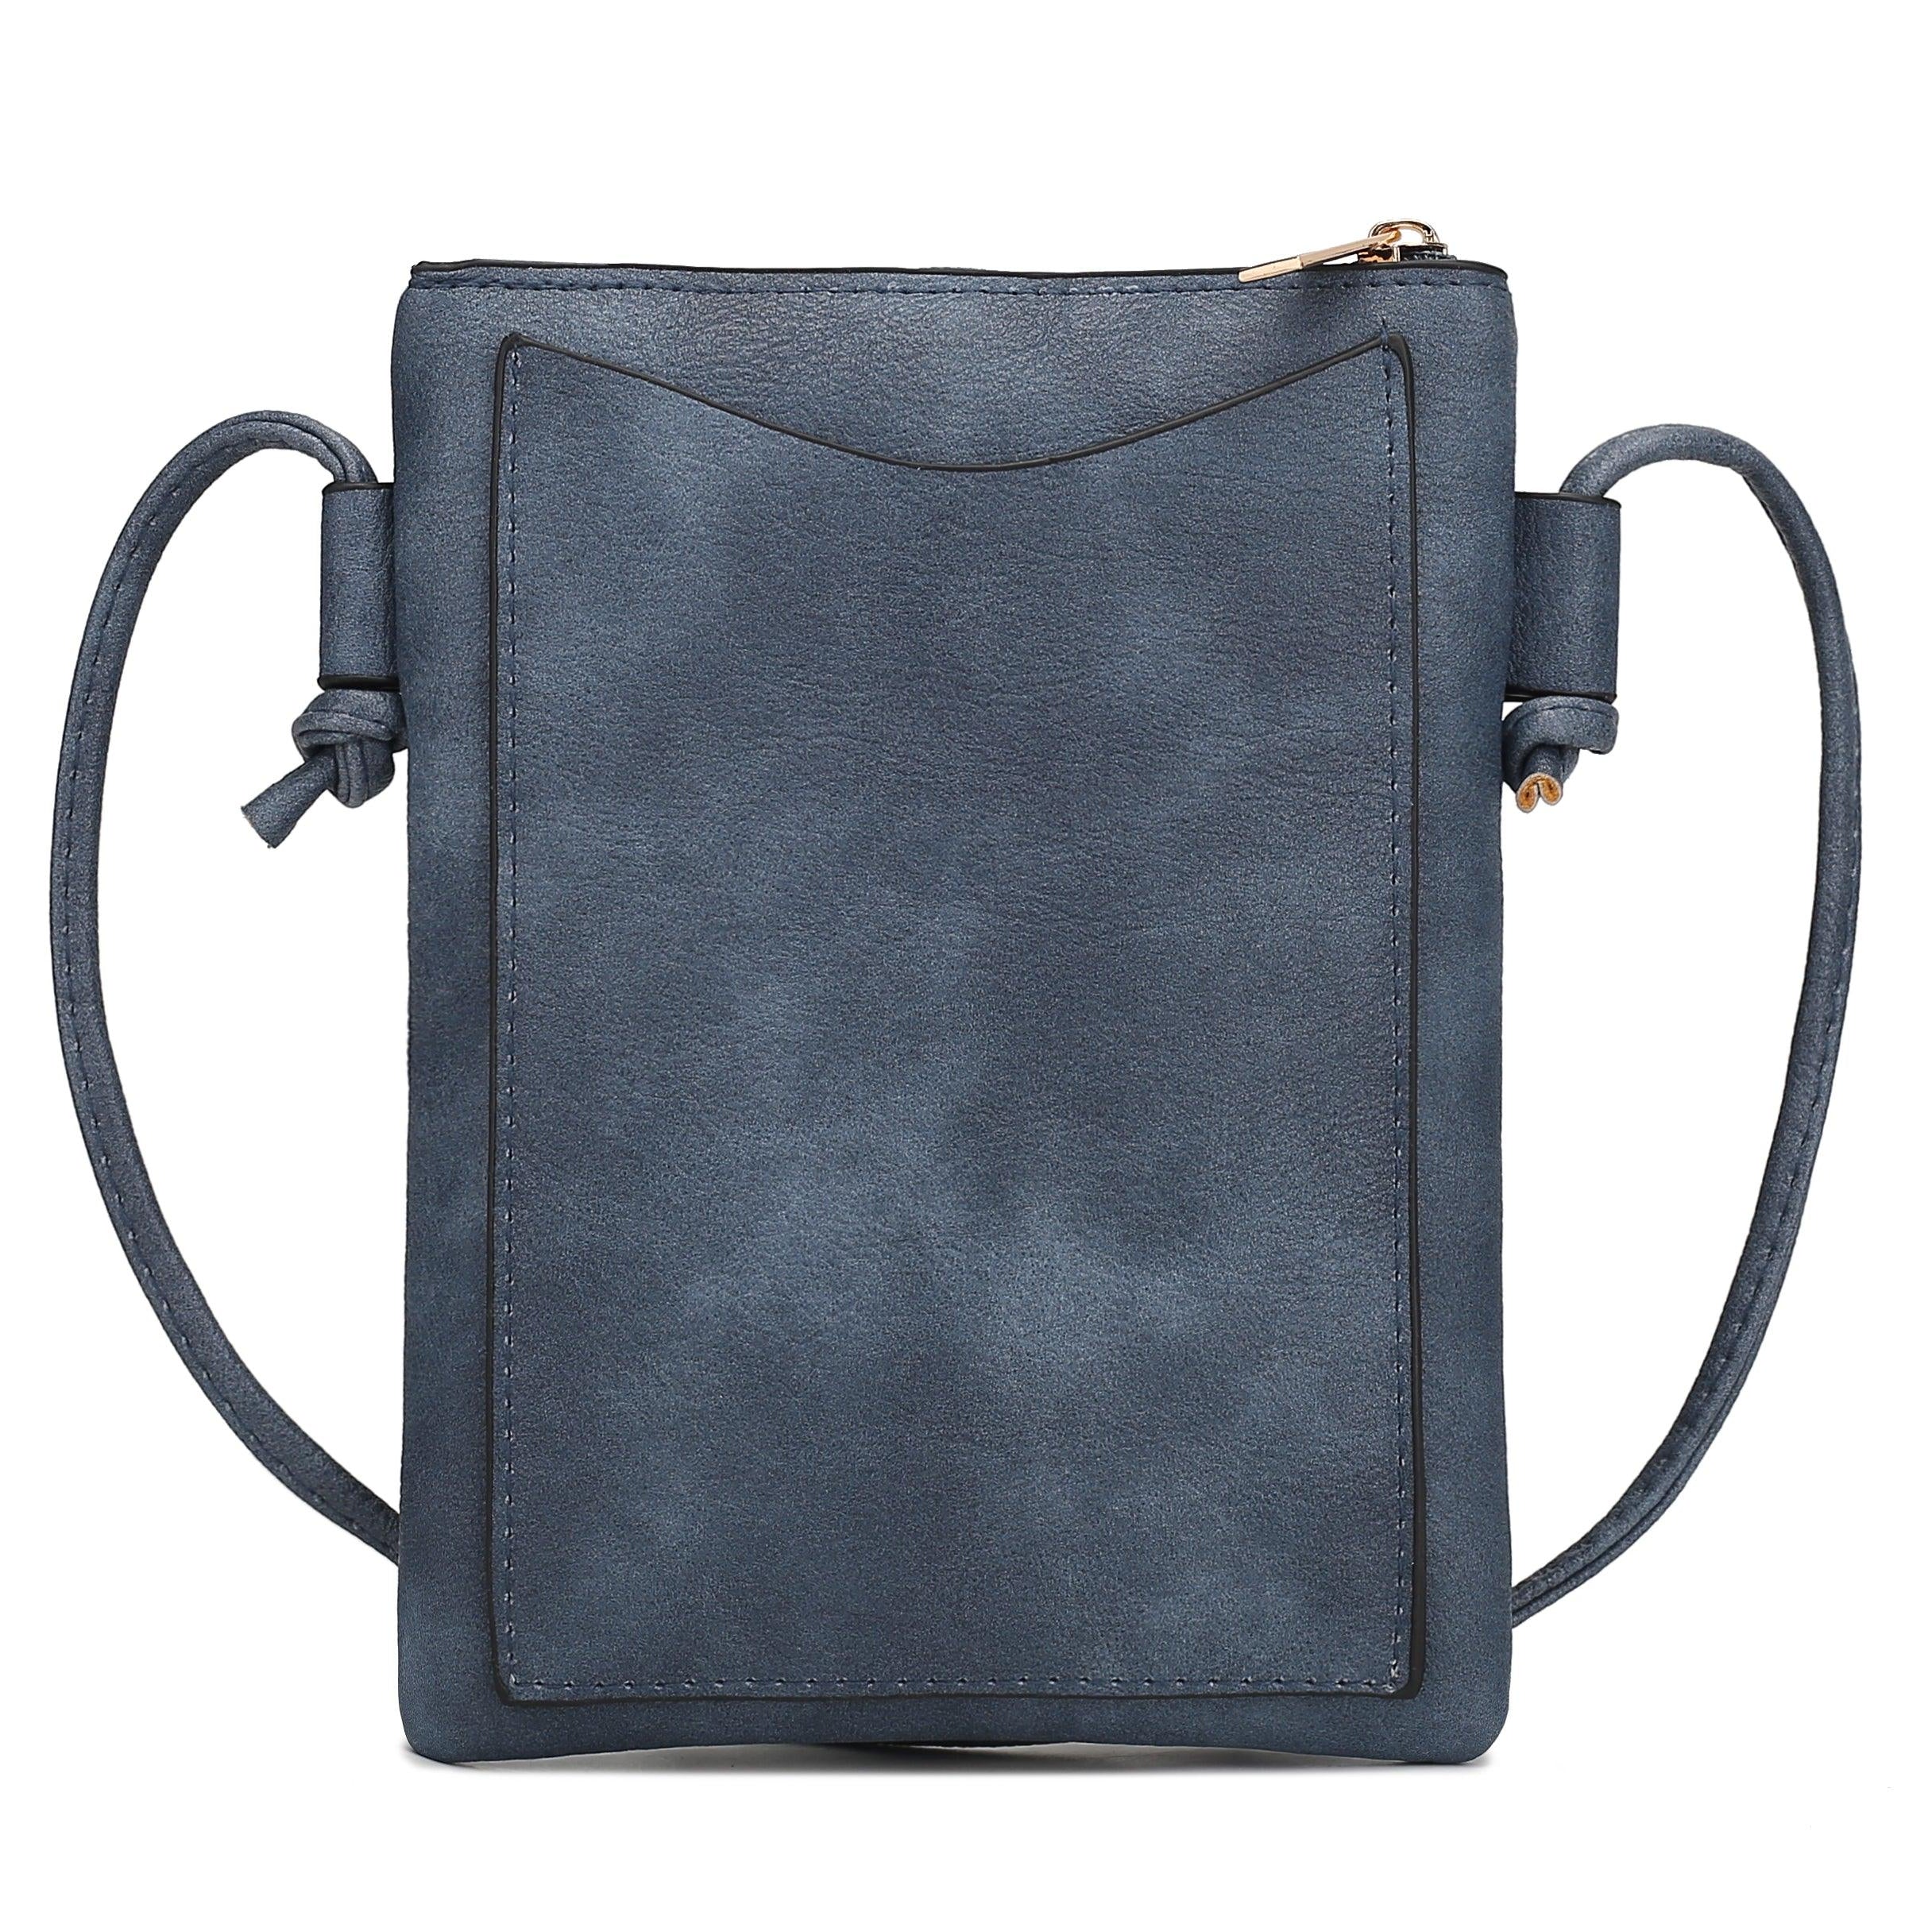 Wallets, Handbags & Accessories Willow Crossbody bag